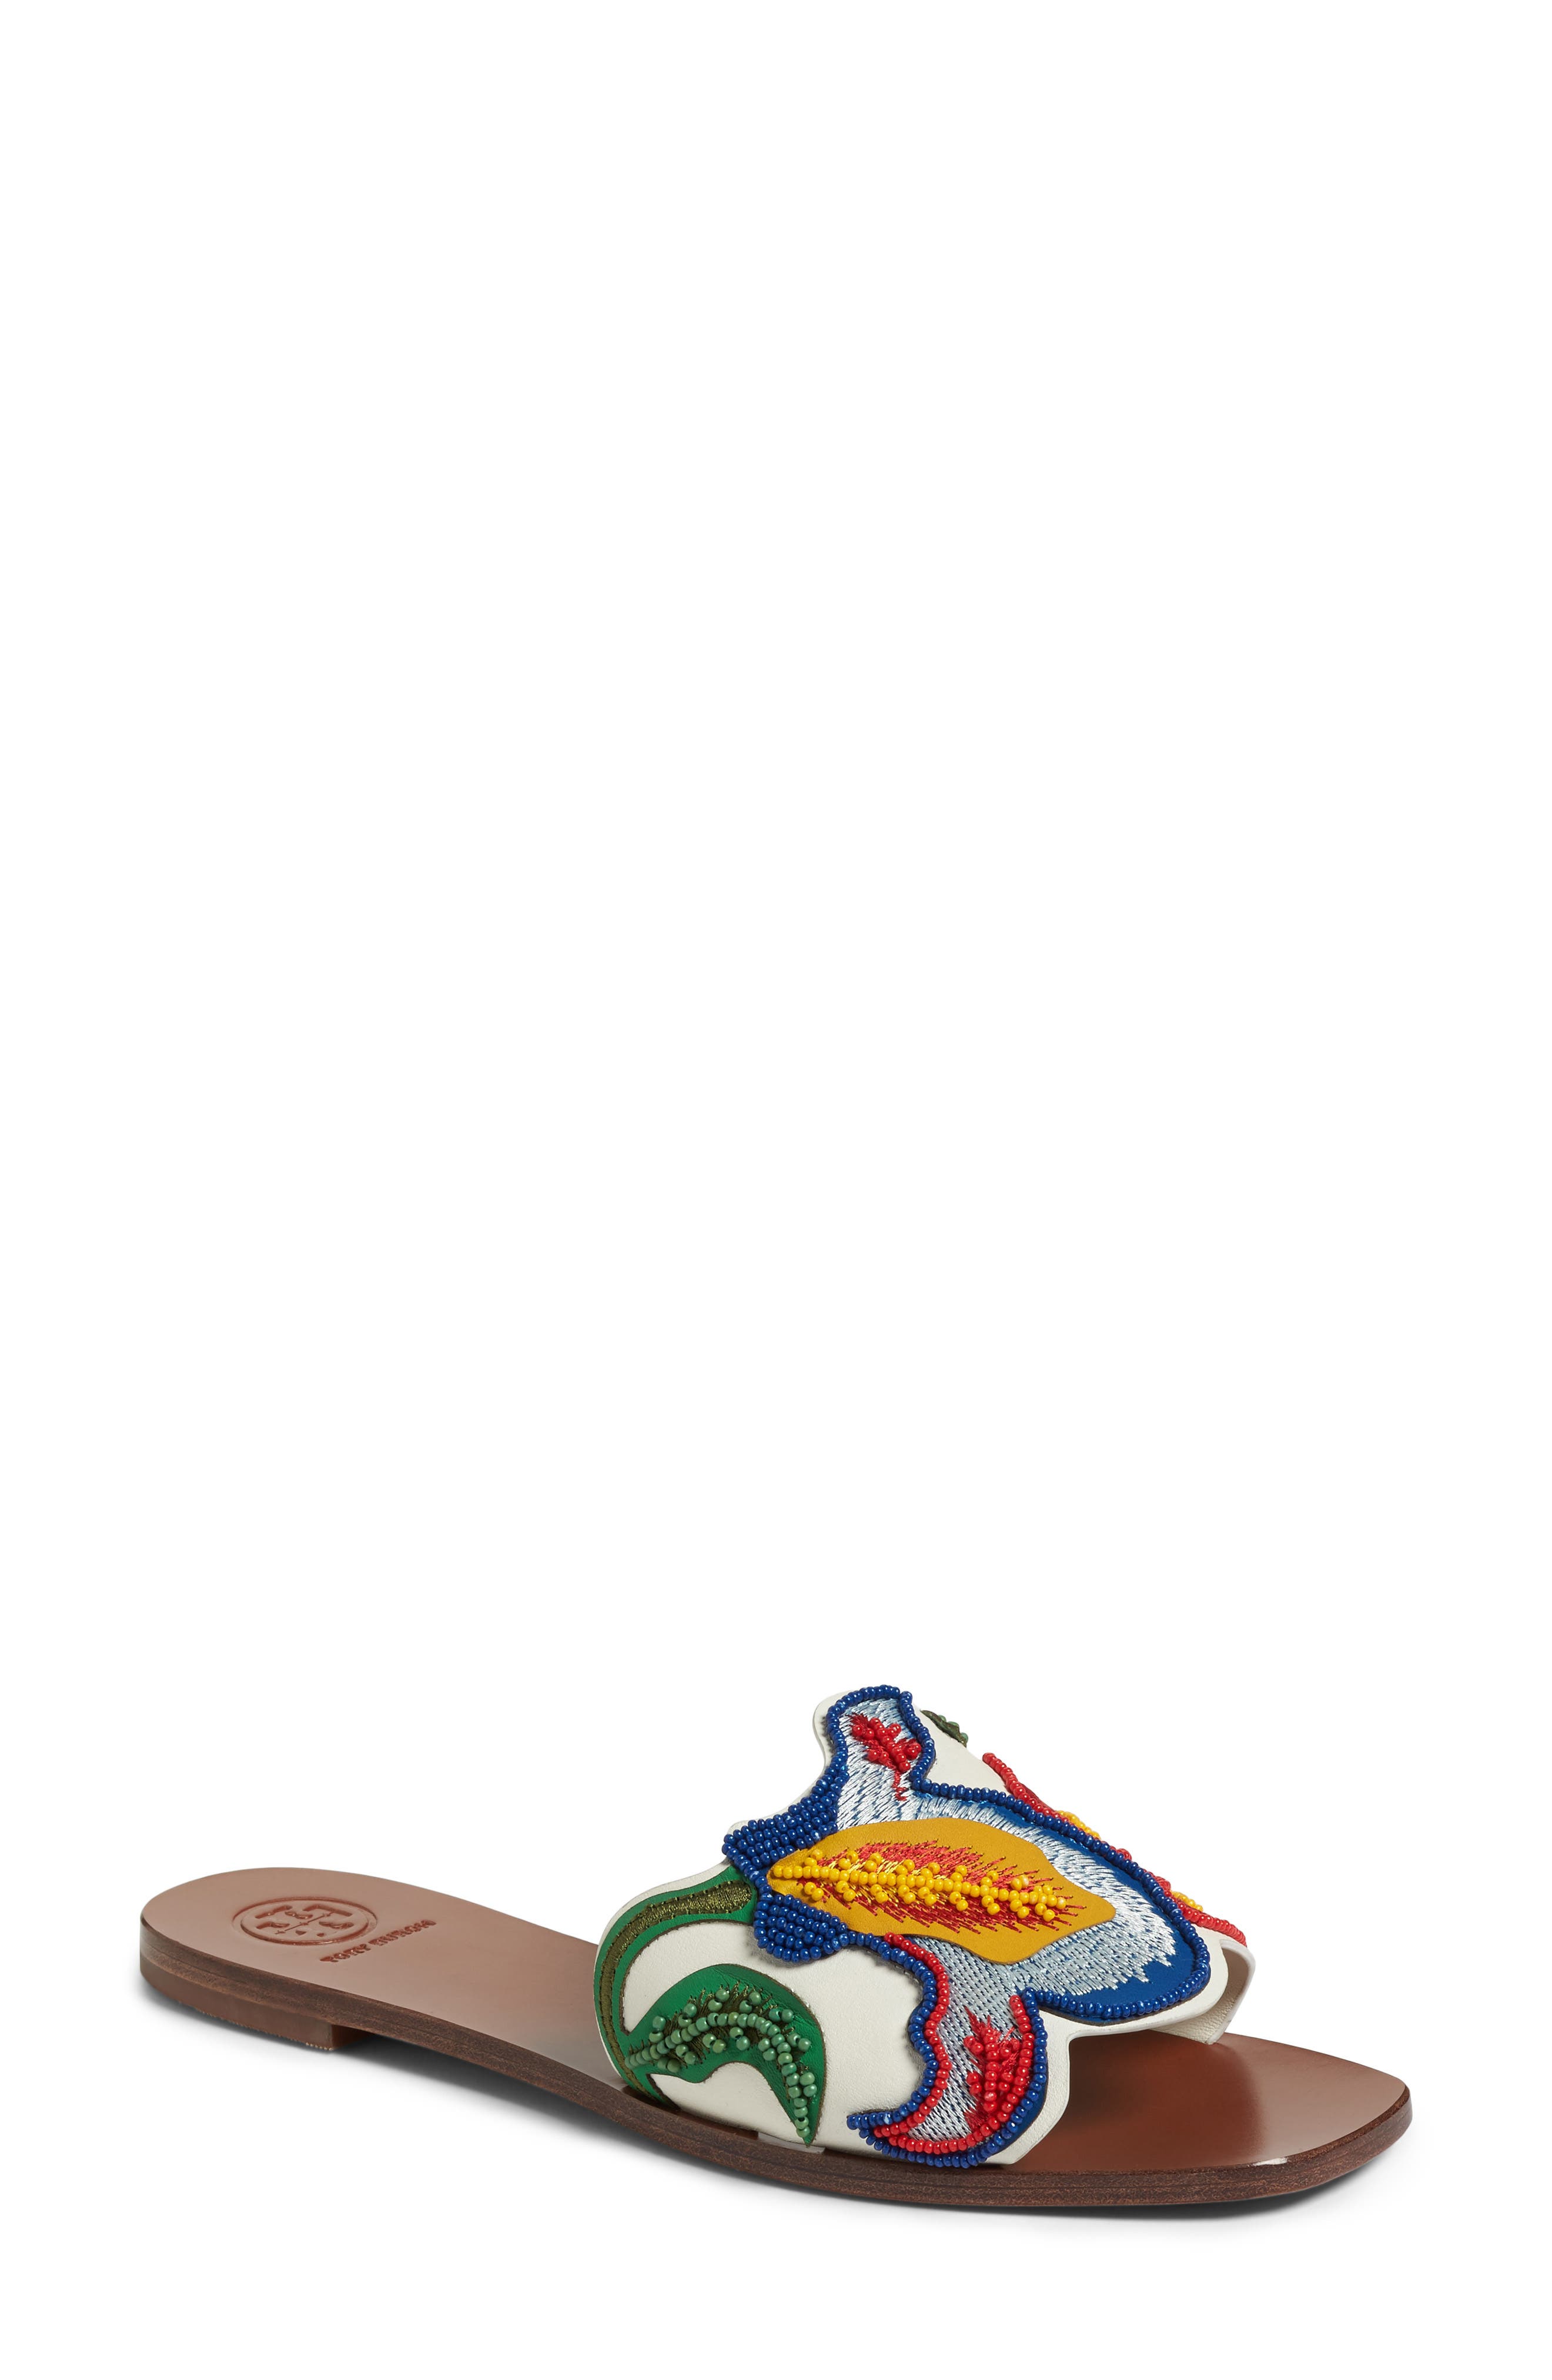 tory burch sandals multicolor